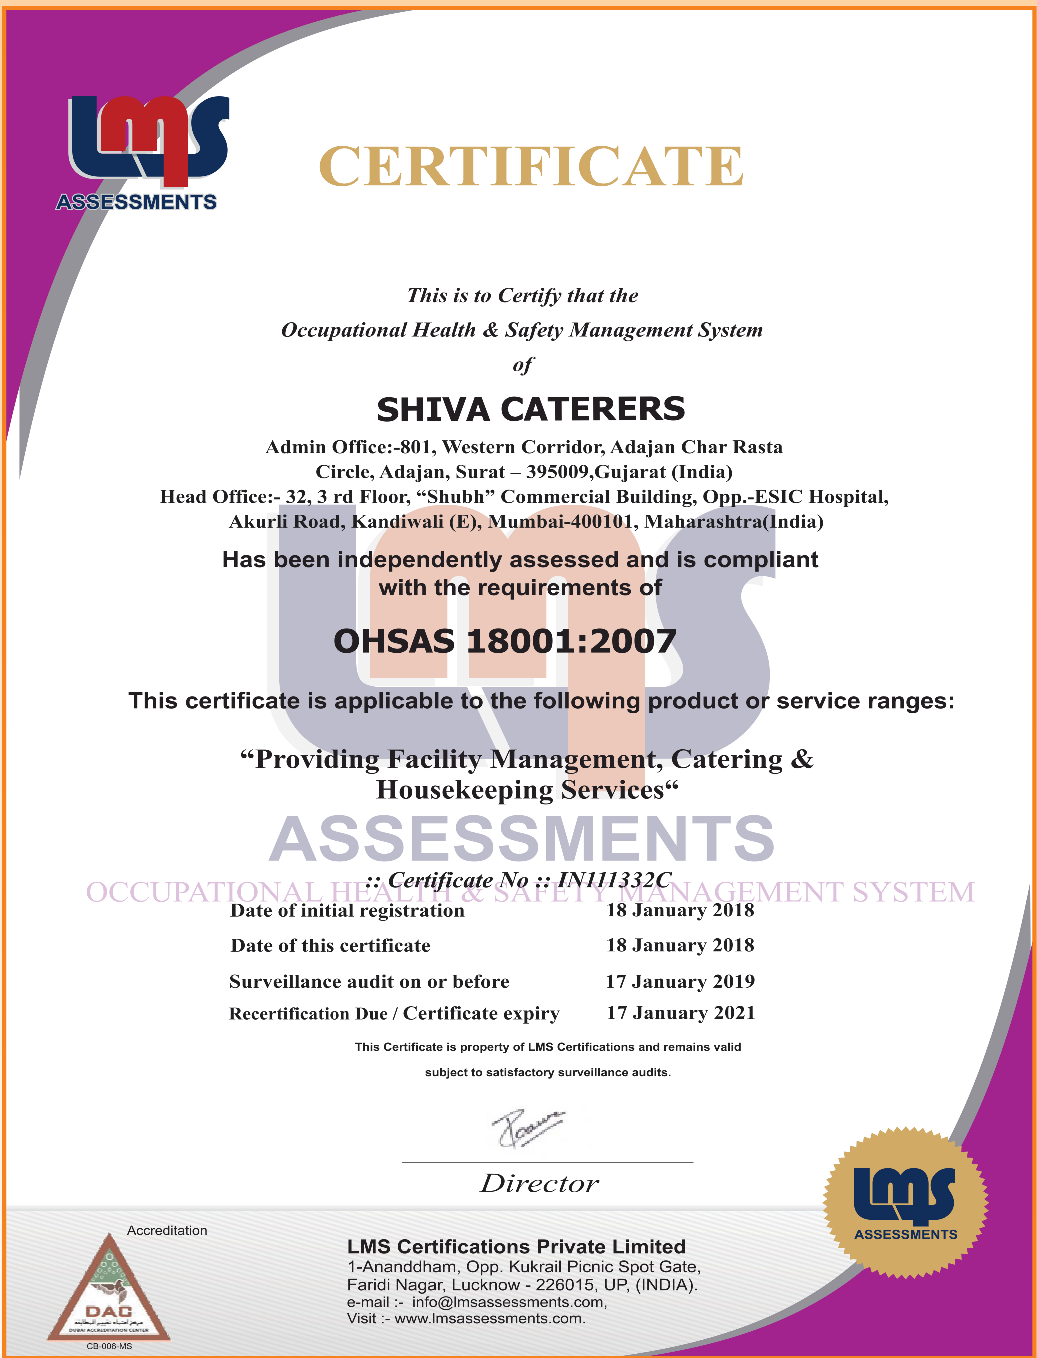  Shiva Cateres - OHSAS 